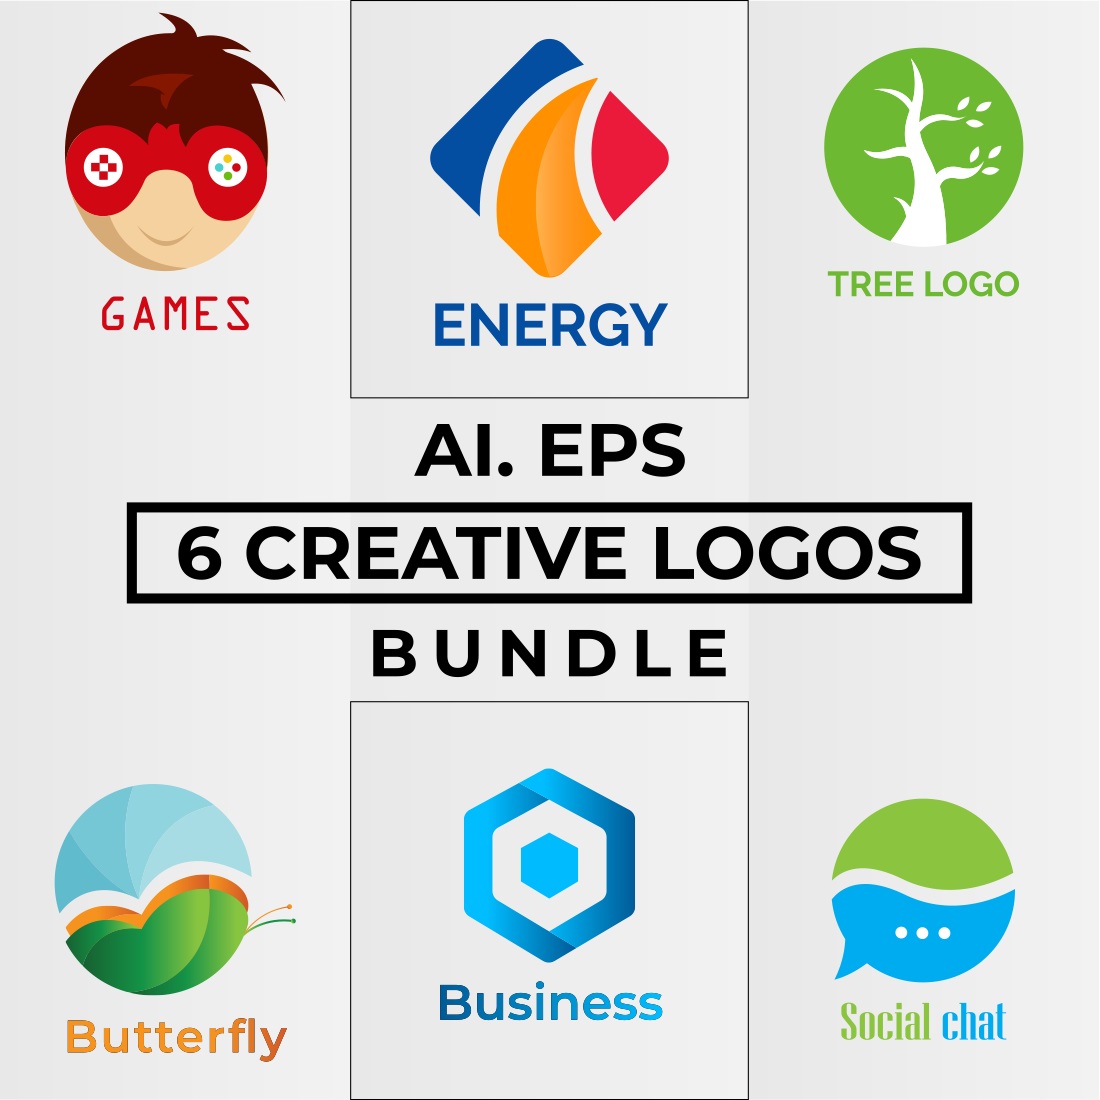 6 Creative Logo Designs Bundles Template cover image.